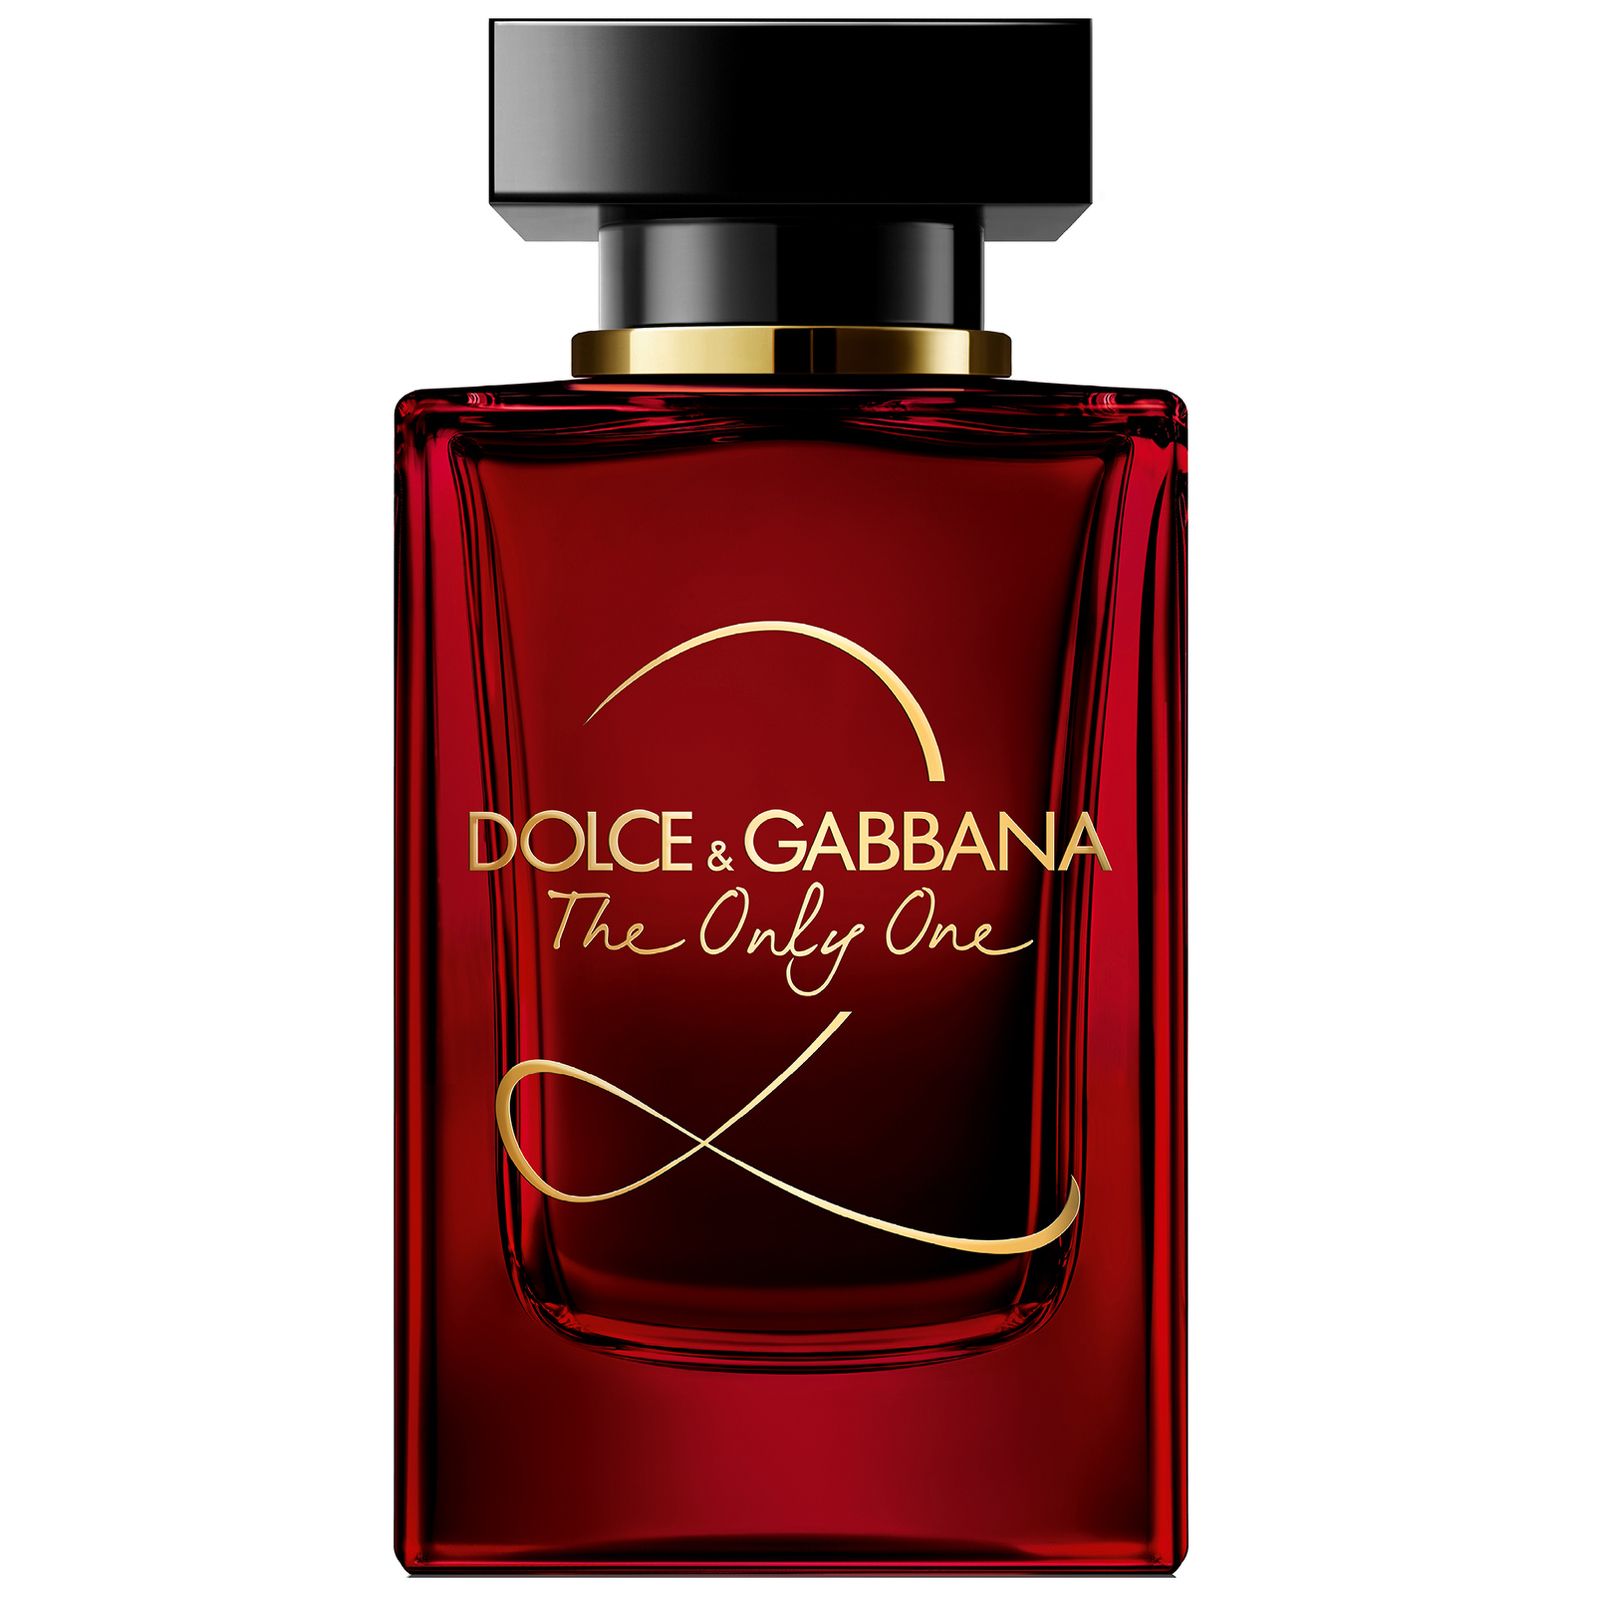 Дольче габбана ван цена. Dolce Gabbana the only one 2 100 мл. Dolce& Gabbana the only one 2 EDP, 100 ml. Dolce Gabbana the only one 2 30 мл. Dolce & Gabbana the only one, EDP., 100 ml.